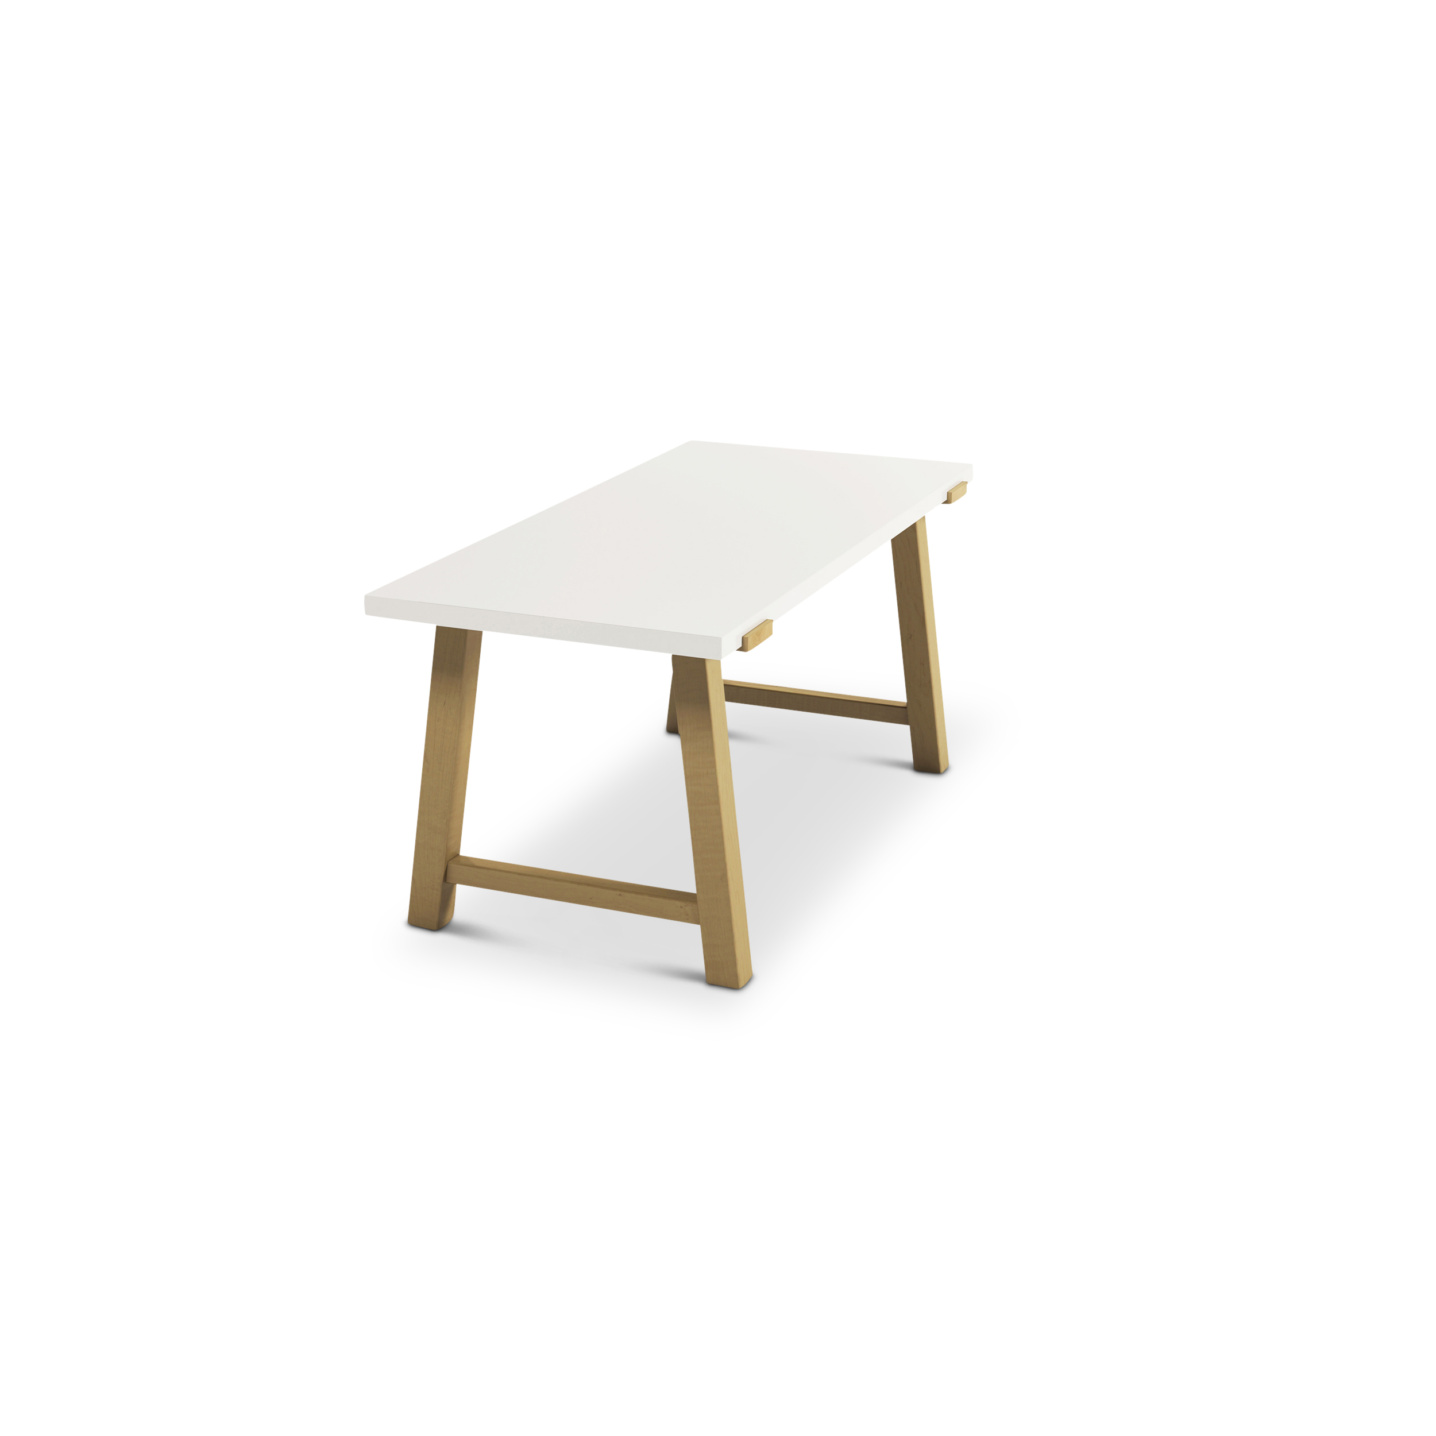 Maple Scandinavian desk with angled legs